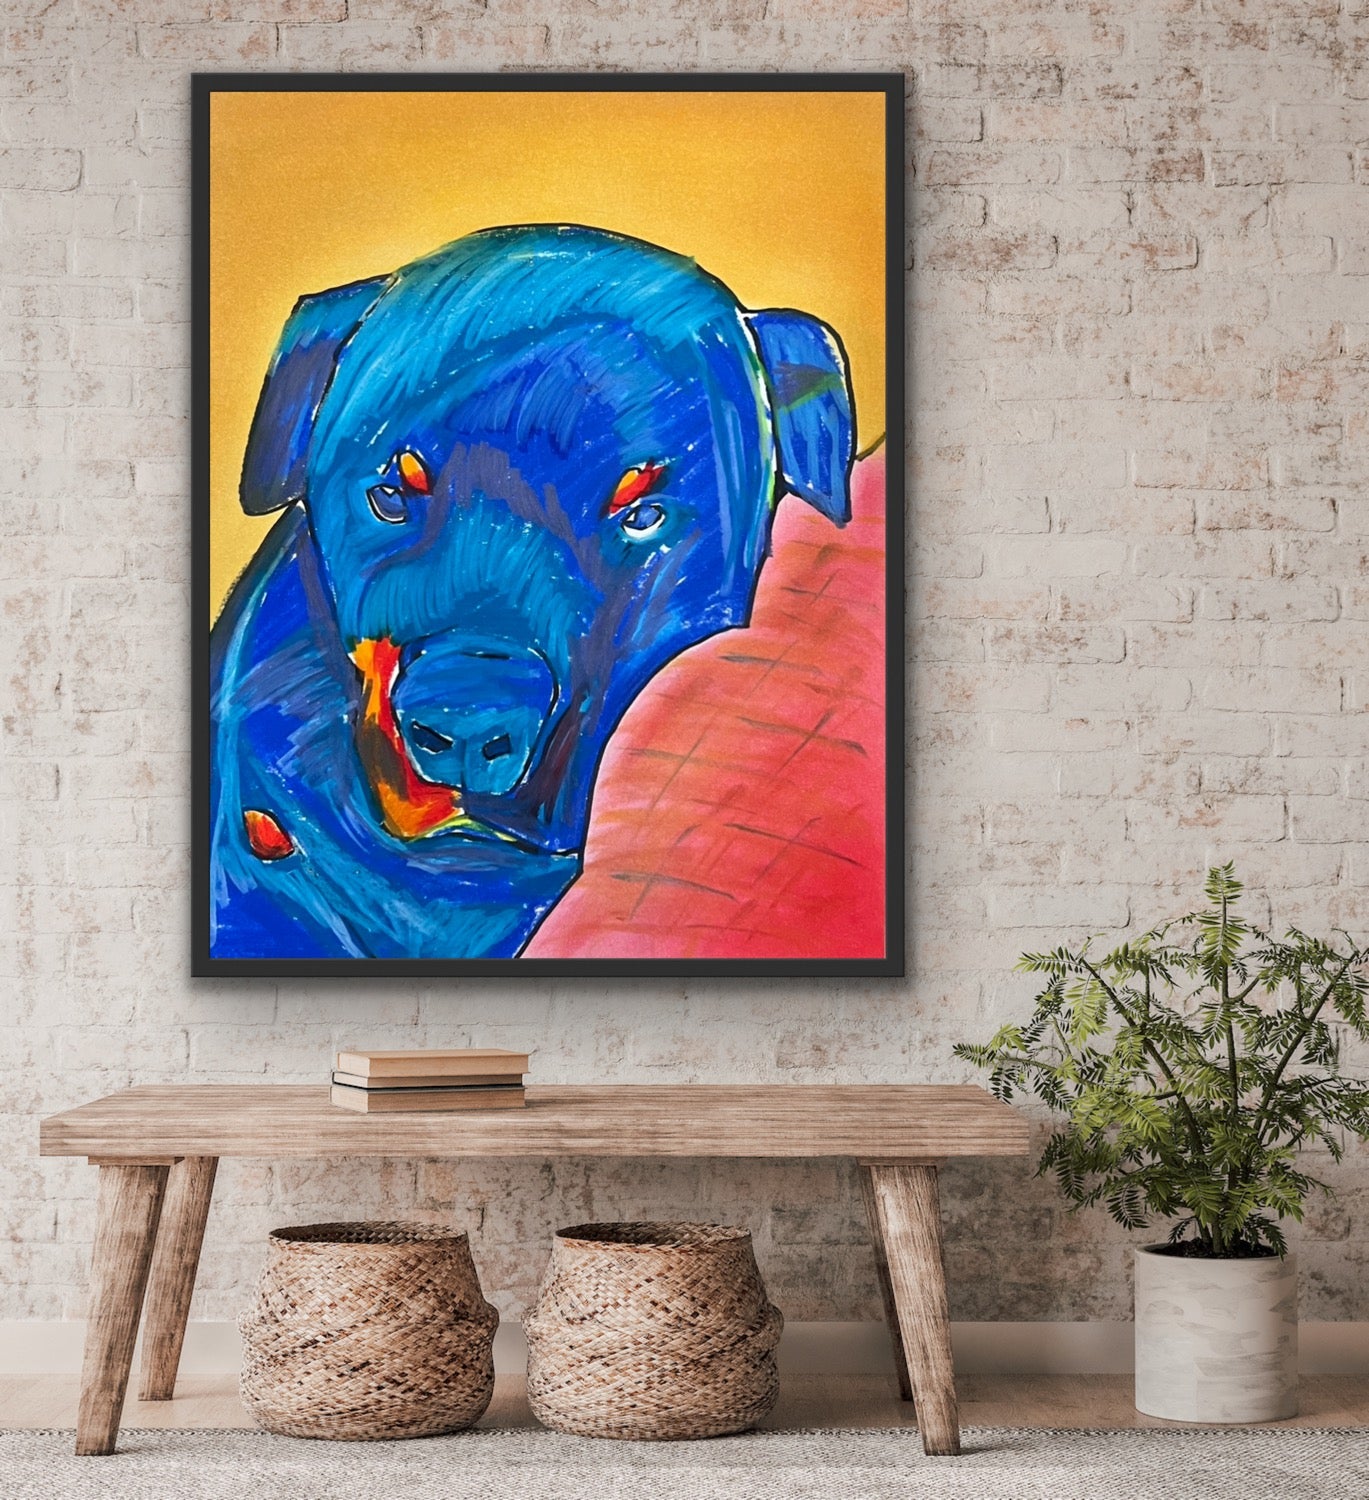 Cuddly Rottweiler - ORIGINAL OIL PASTEL ARTWORK - 11x14"